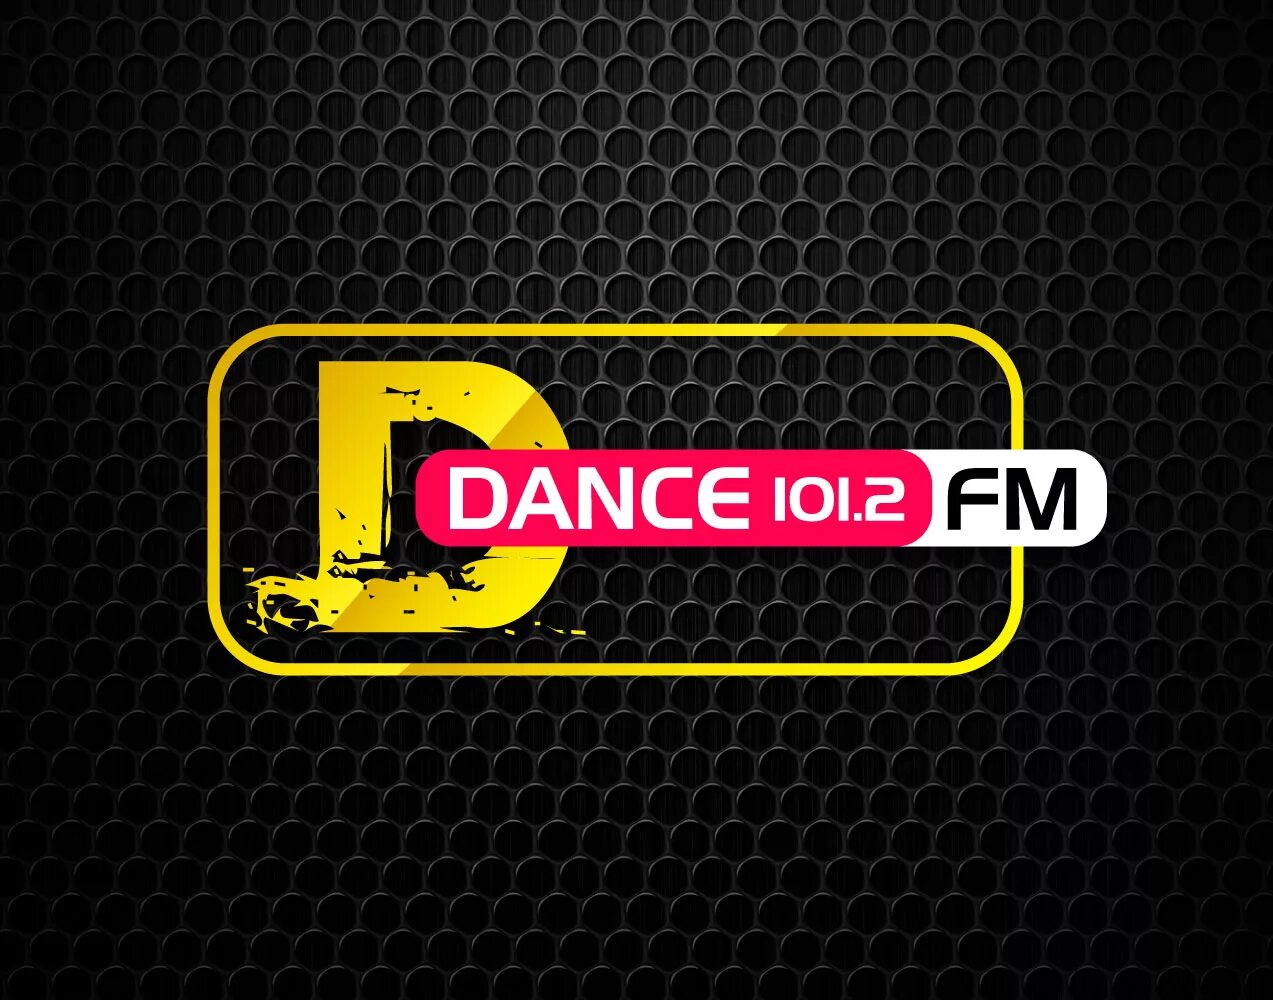 DFM логотип. Логотипы радиостанций ди ФМ. DFM радио лого. Реклама DFM 101.2. Фм радио ди фм в качестве